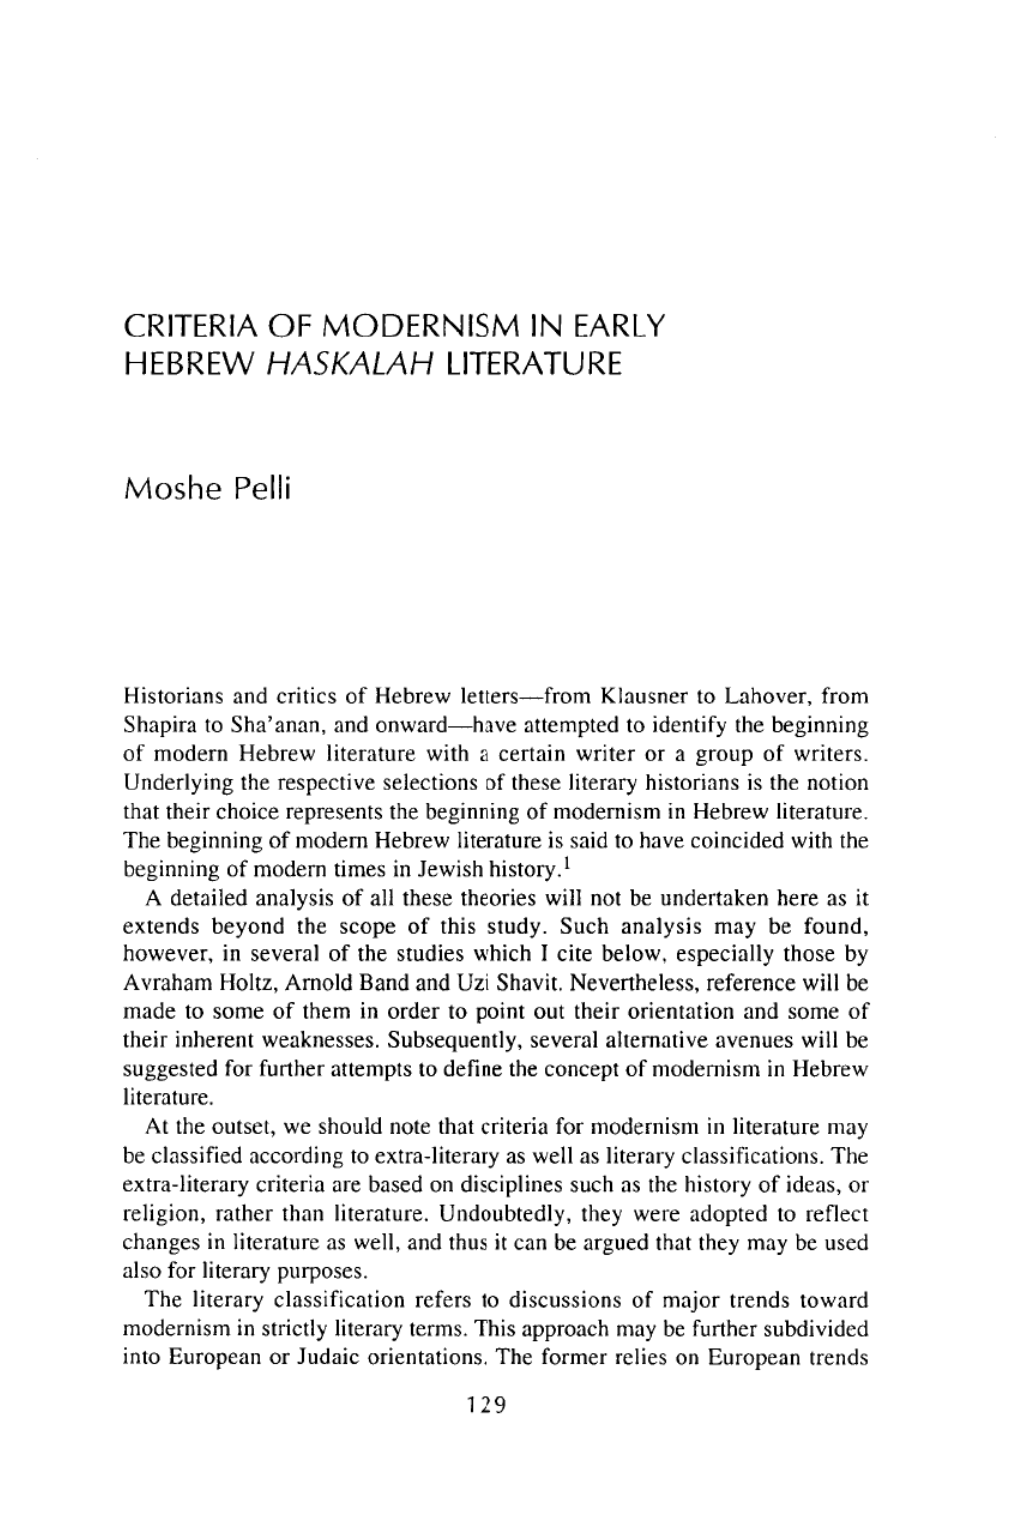 Criteria of Modernism in Early Hebrew Haskalah Literature